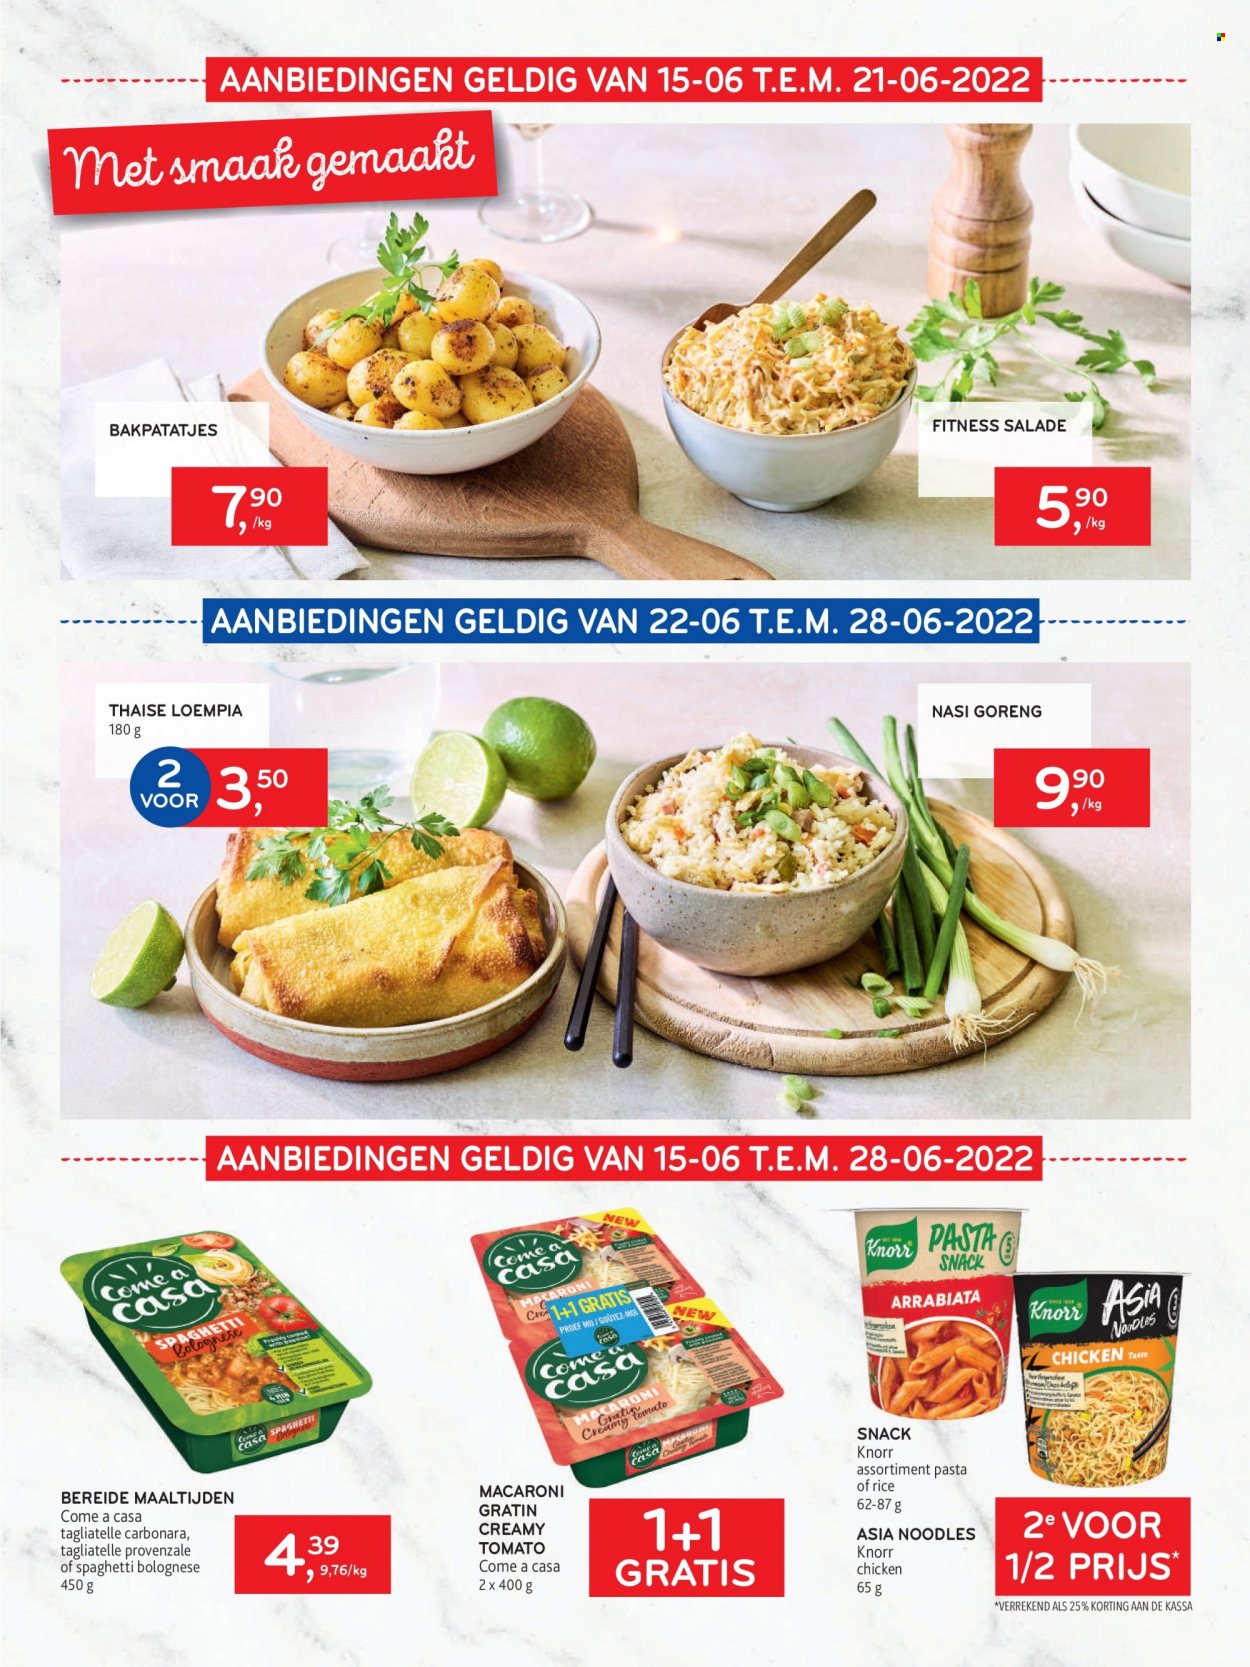 thumbnail - Alvo-aanbieding - 15/06/2022 - 28/06/2022 -  producten in de aanbieding - Knorr, macaroni, pasta, spaghetti, tagliatelle. Pagina 9.